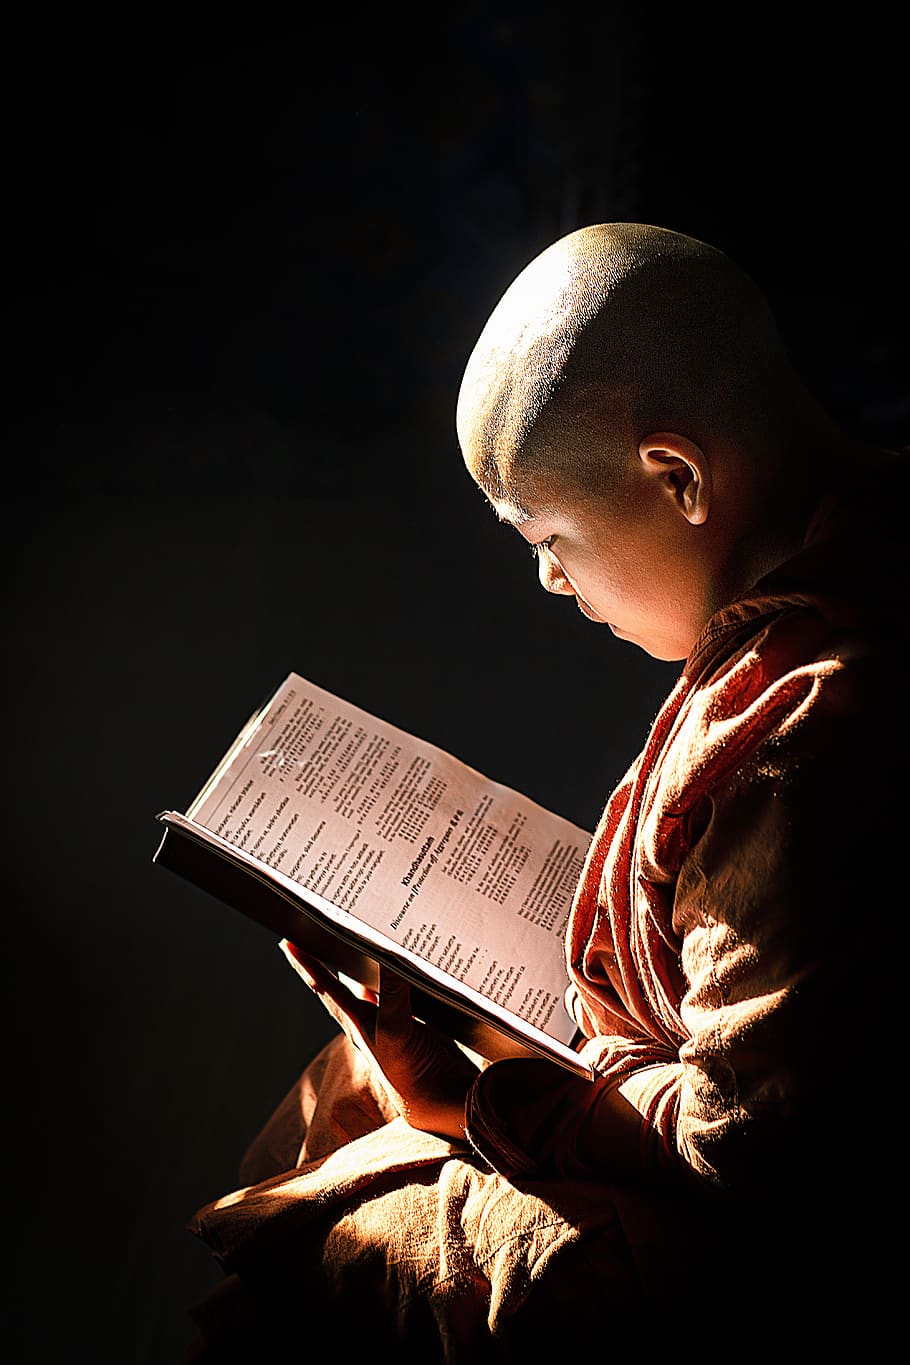 budismo theravada, samanera, novicio, budista, monasterio, lectura, monje, personas, canto, fe